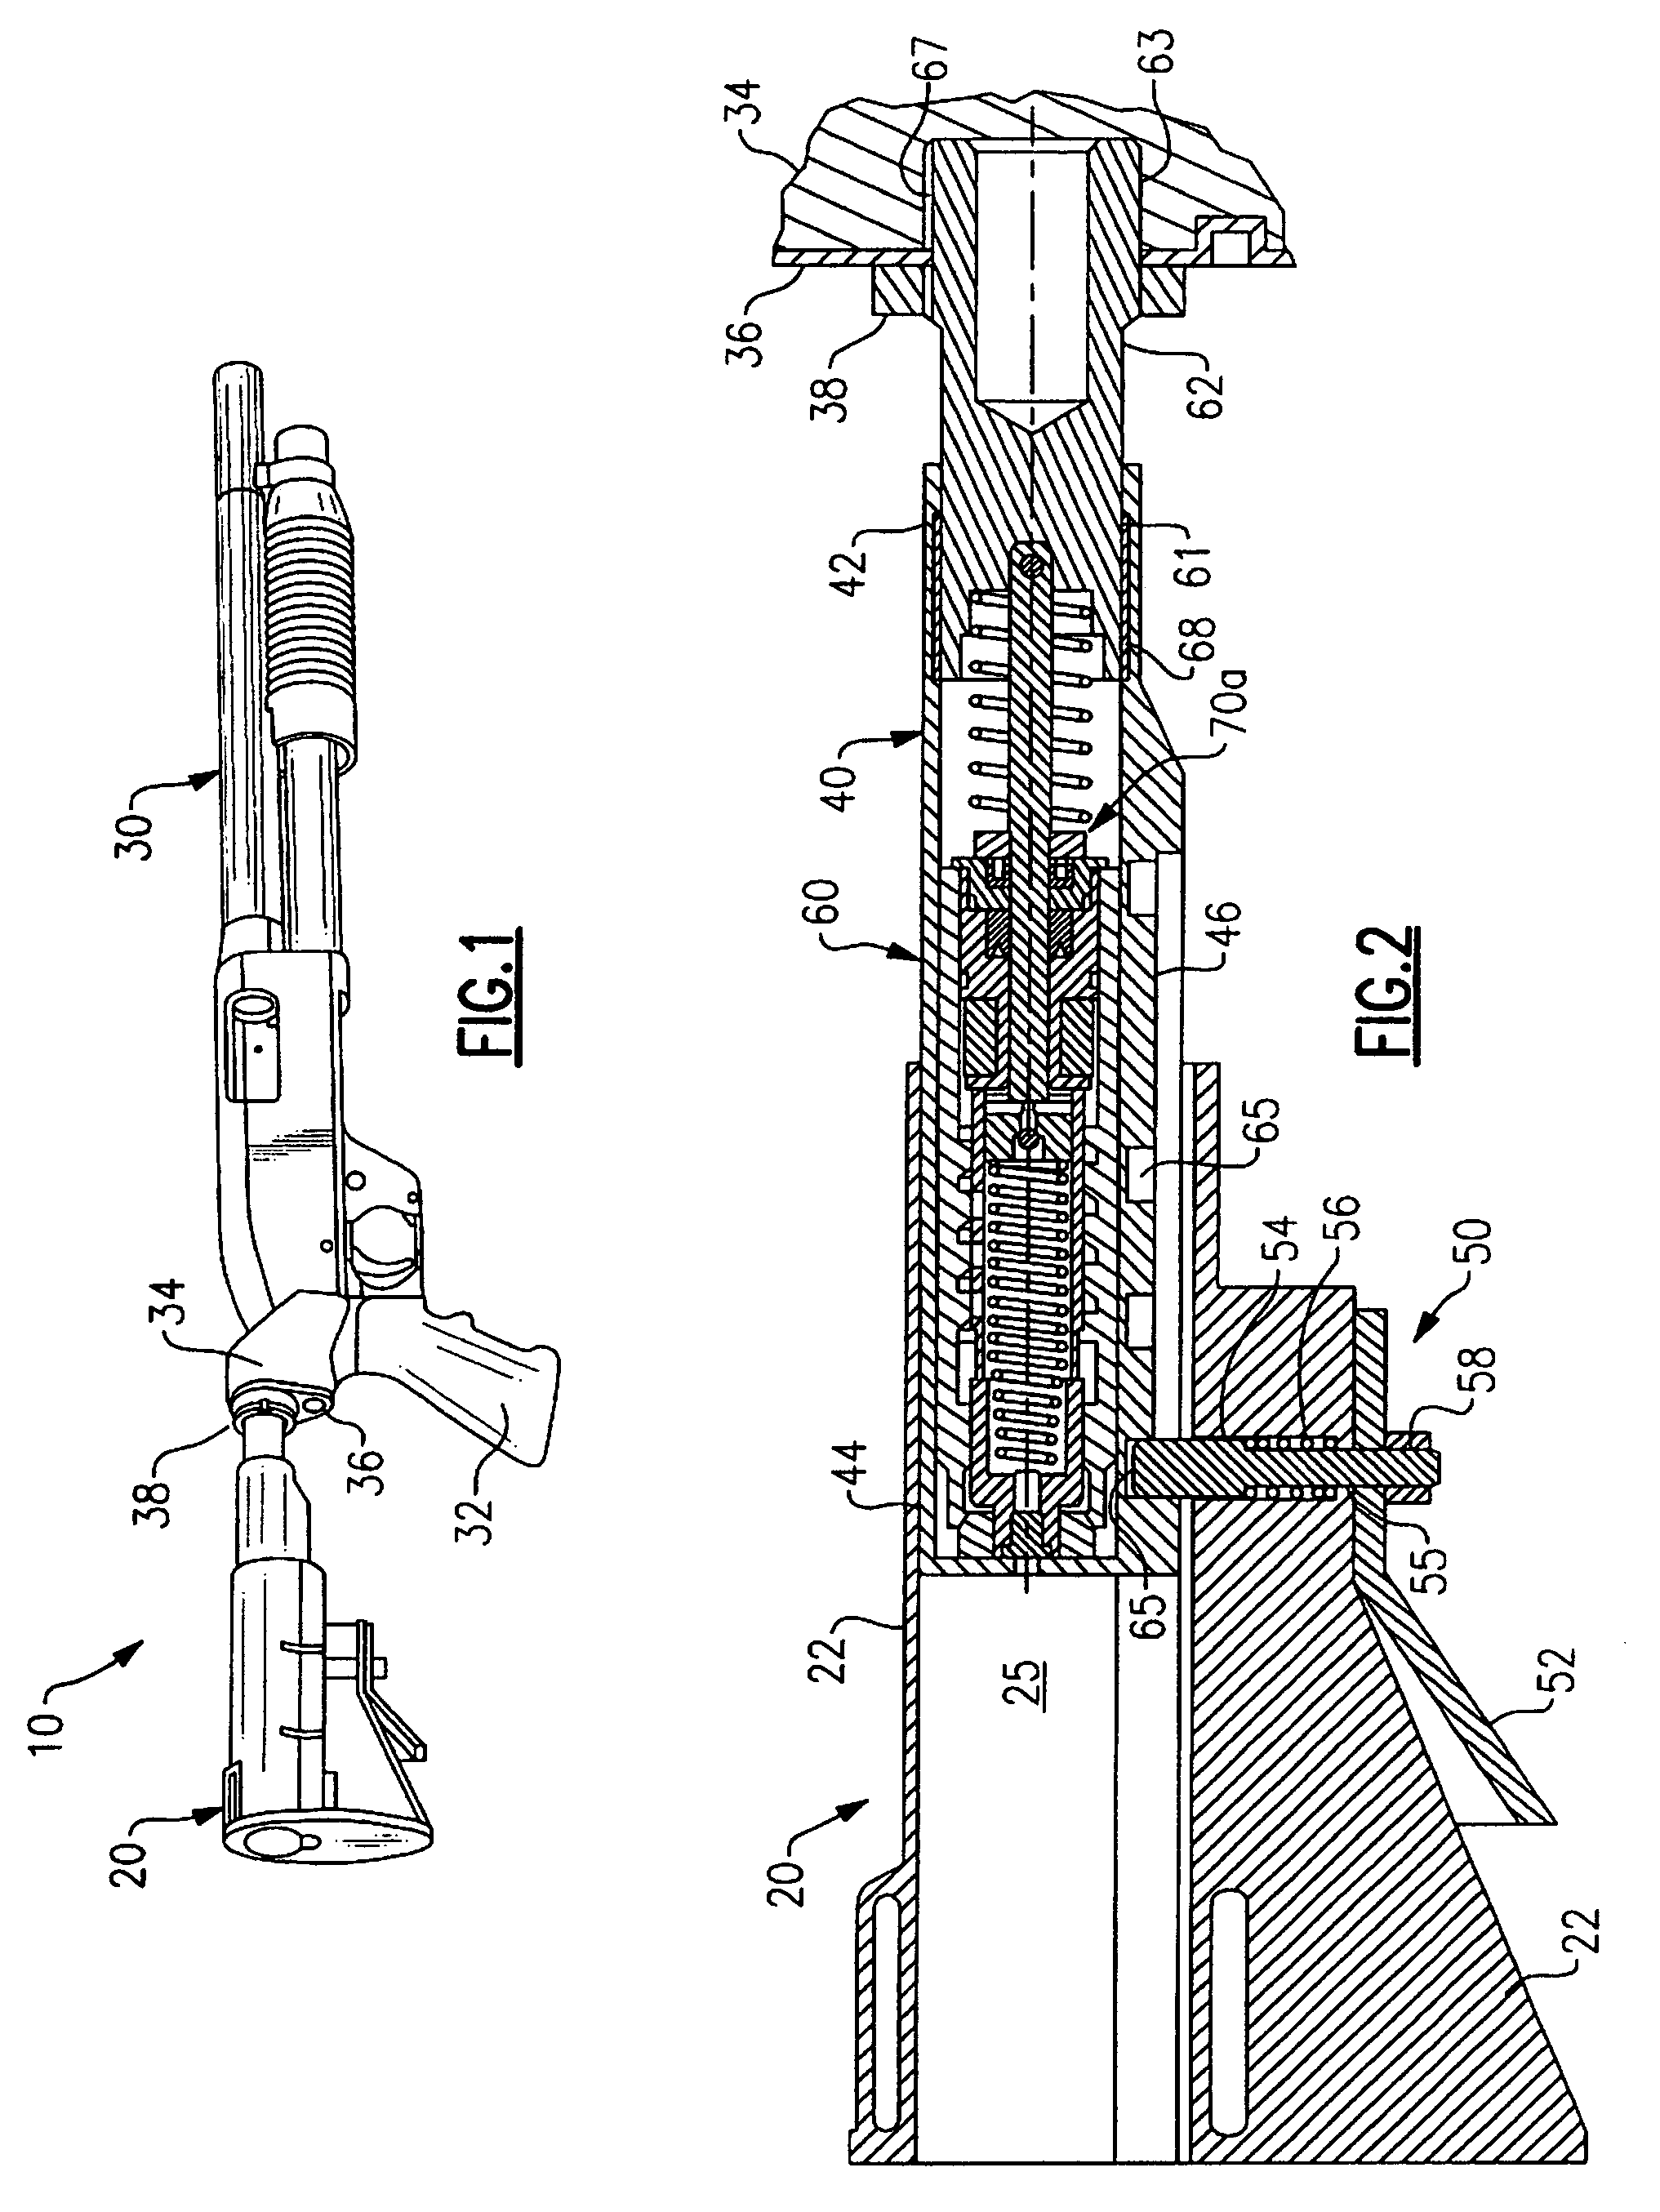 Hydraulic recoil buffer assembly